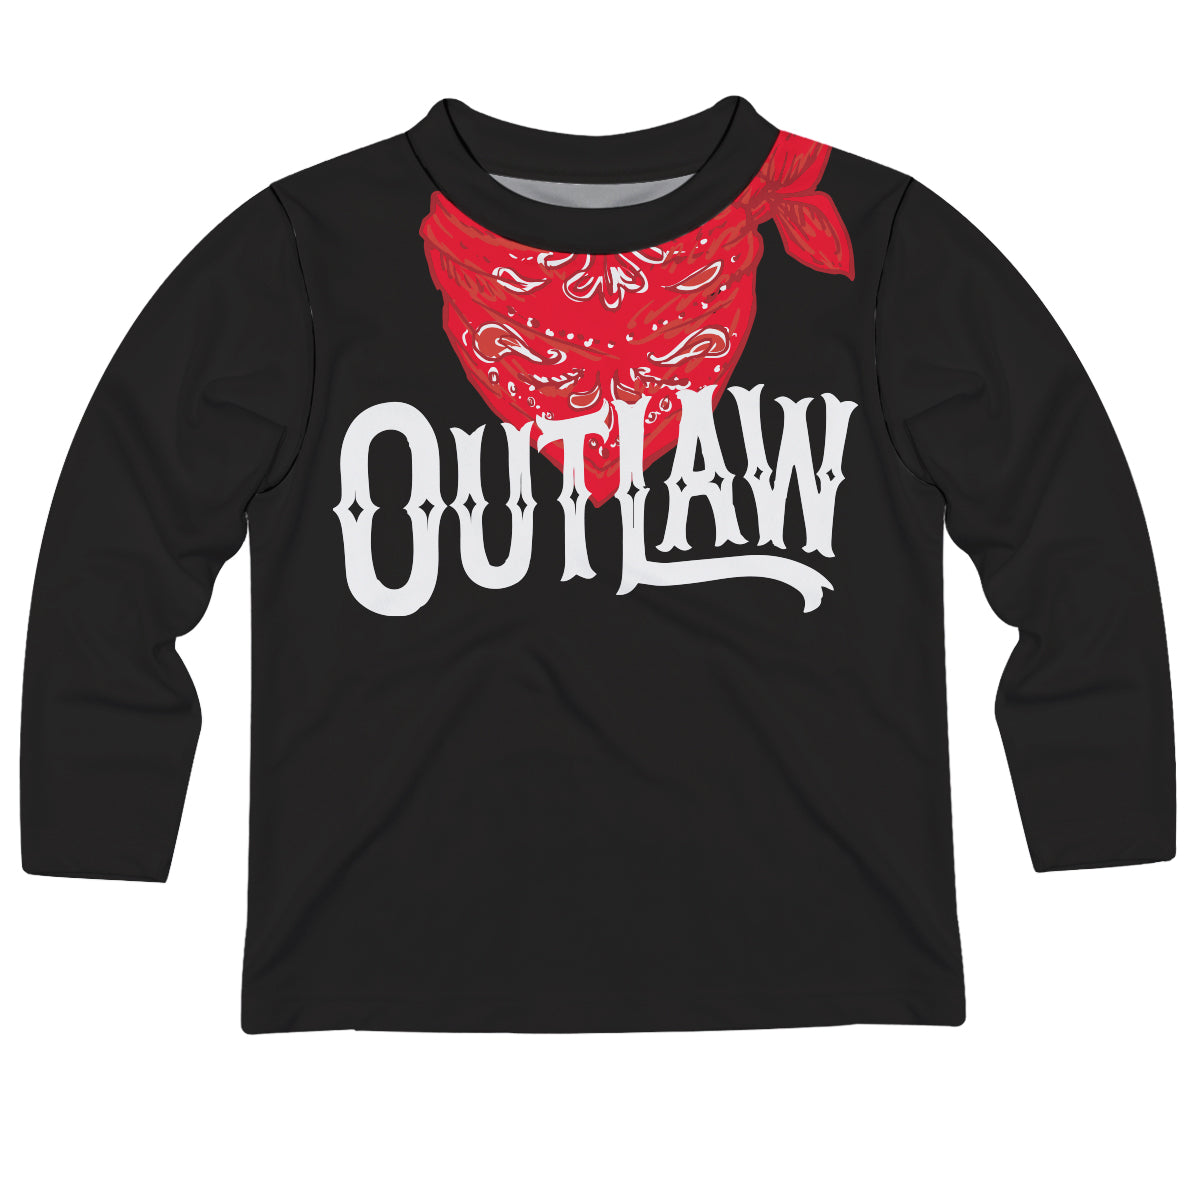 Outlaw Black Long Sleeve Tee Shirt - Wimziy&Co.